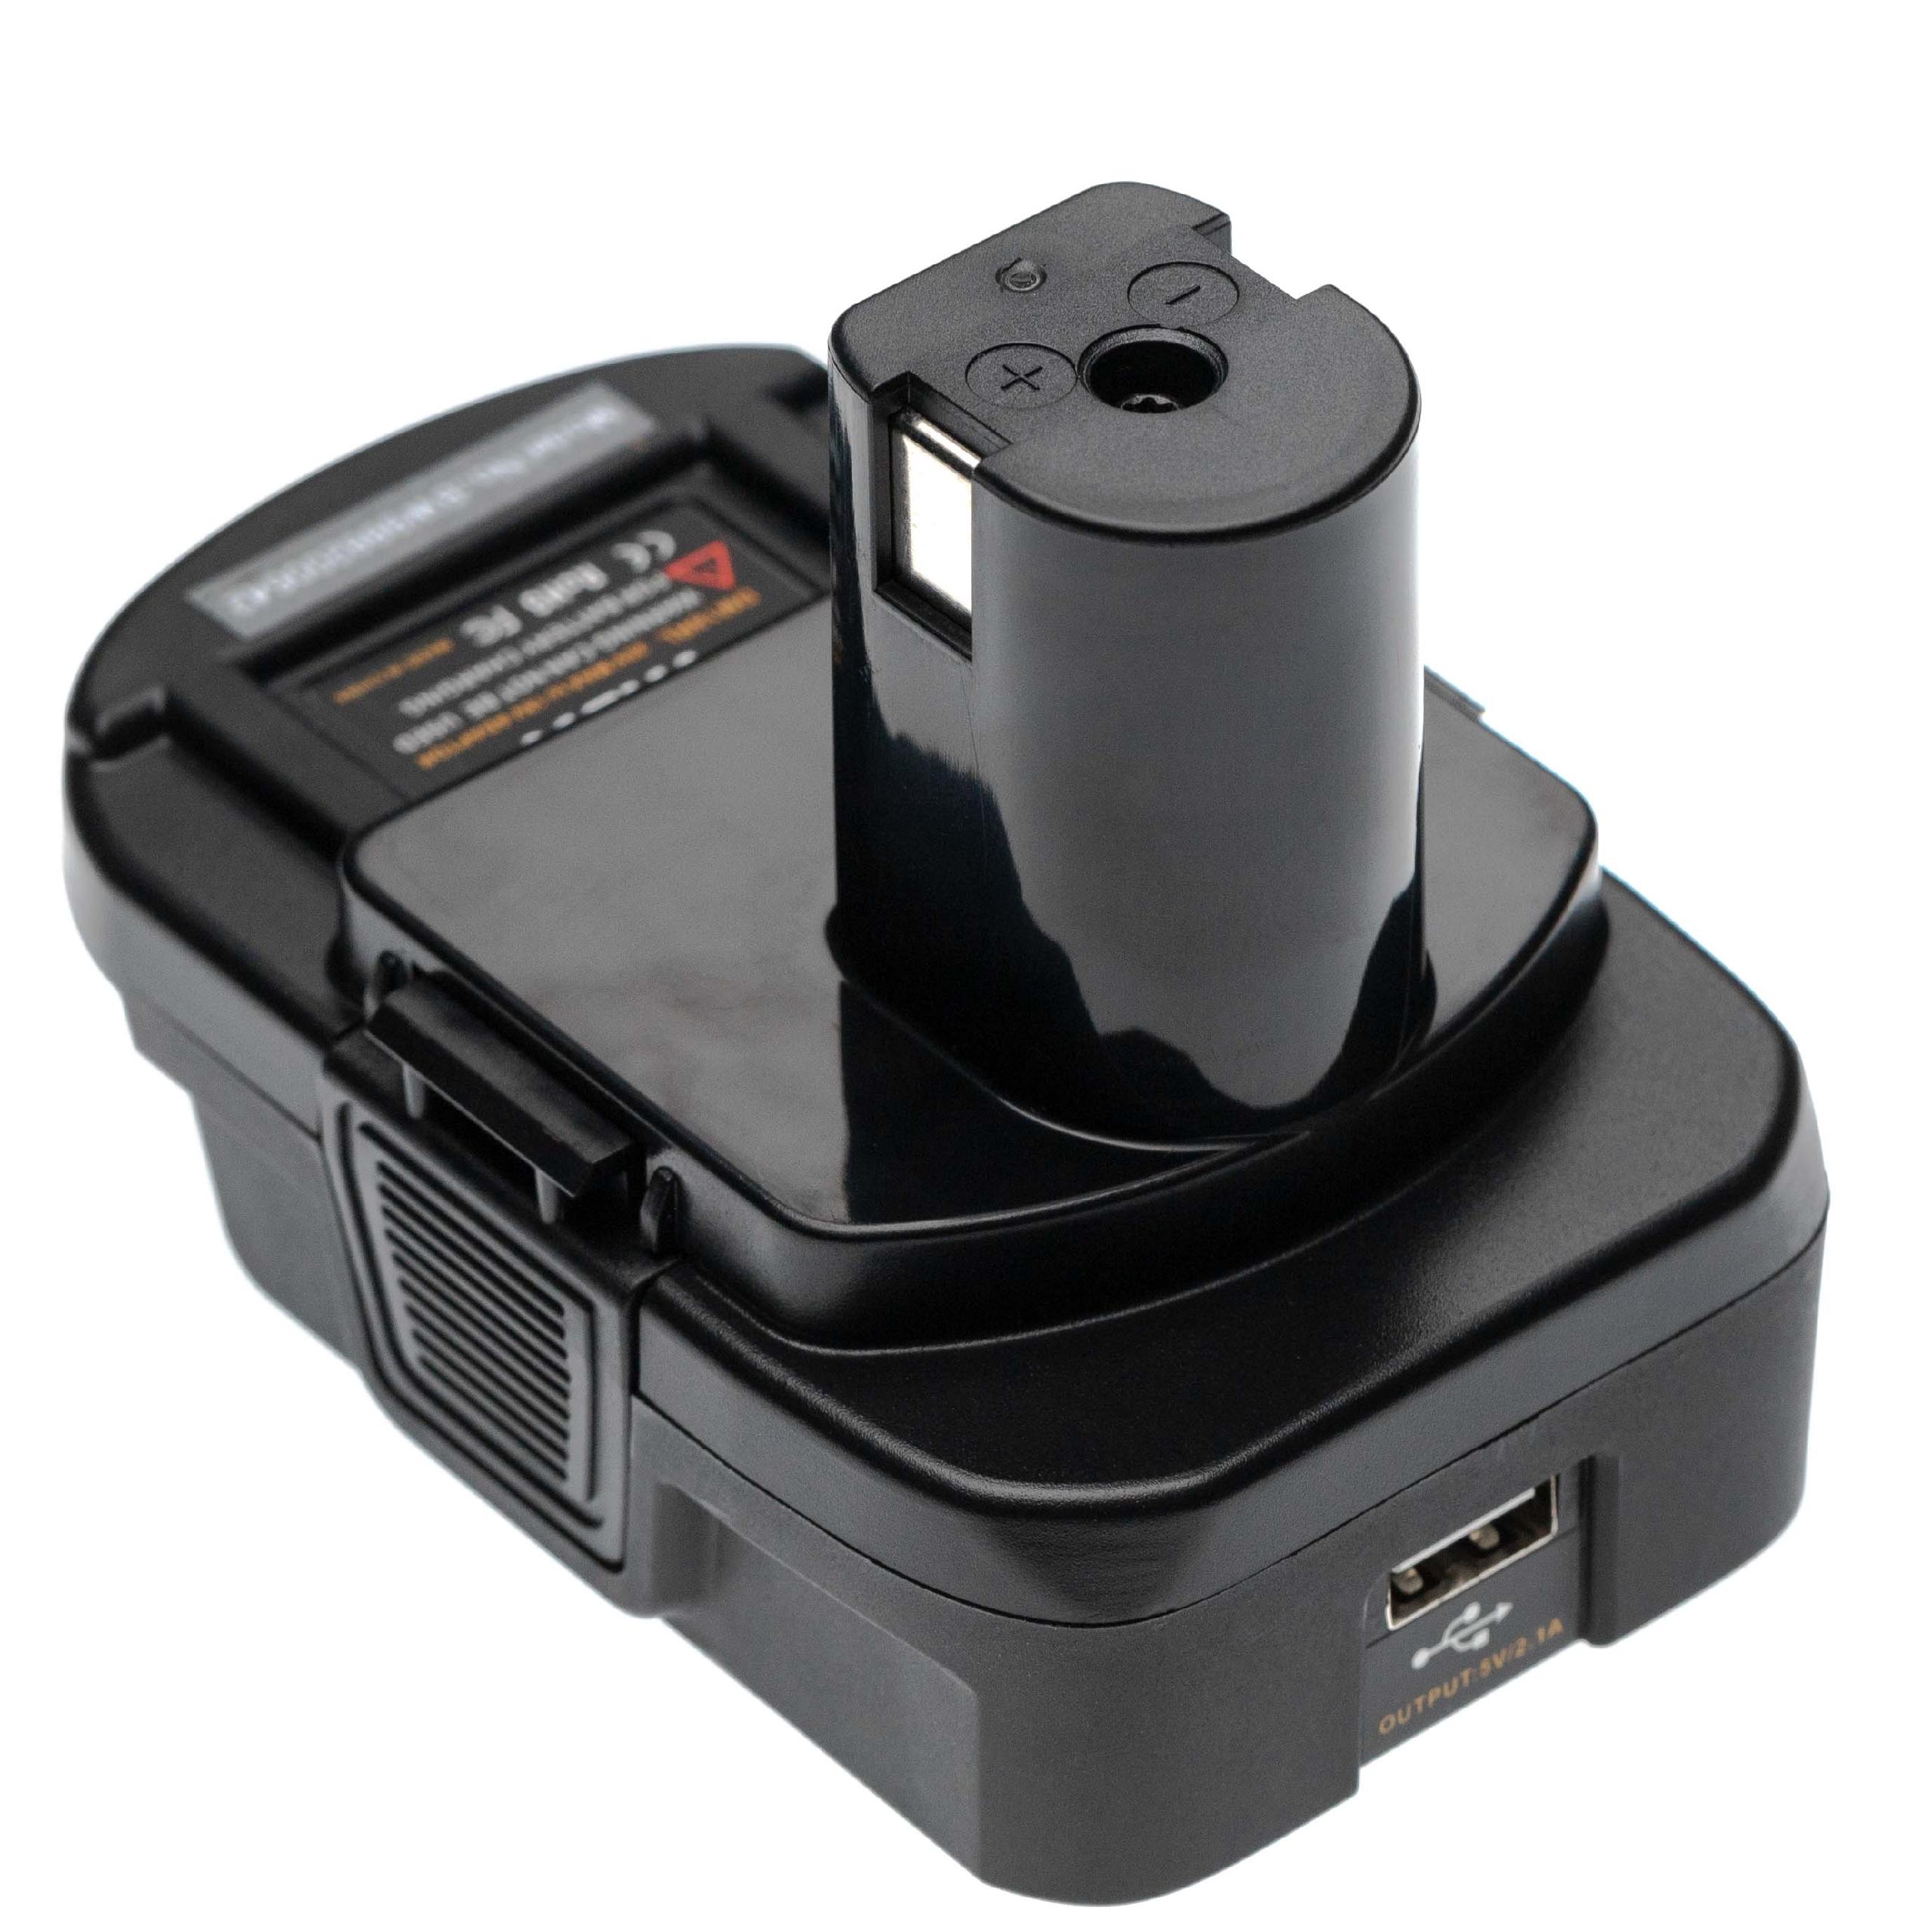 Adaptateur batterie pour outil DeWalt & Milwaukee (20 V Li-ion vers 18 V), prise USB